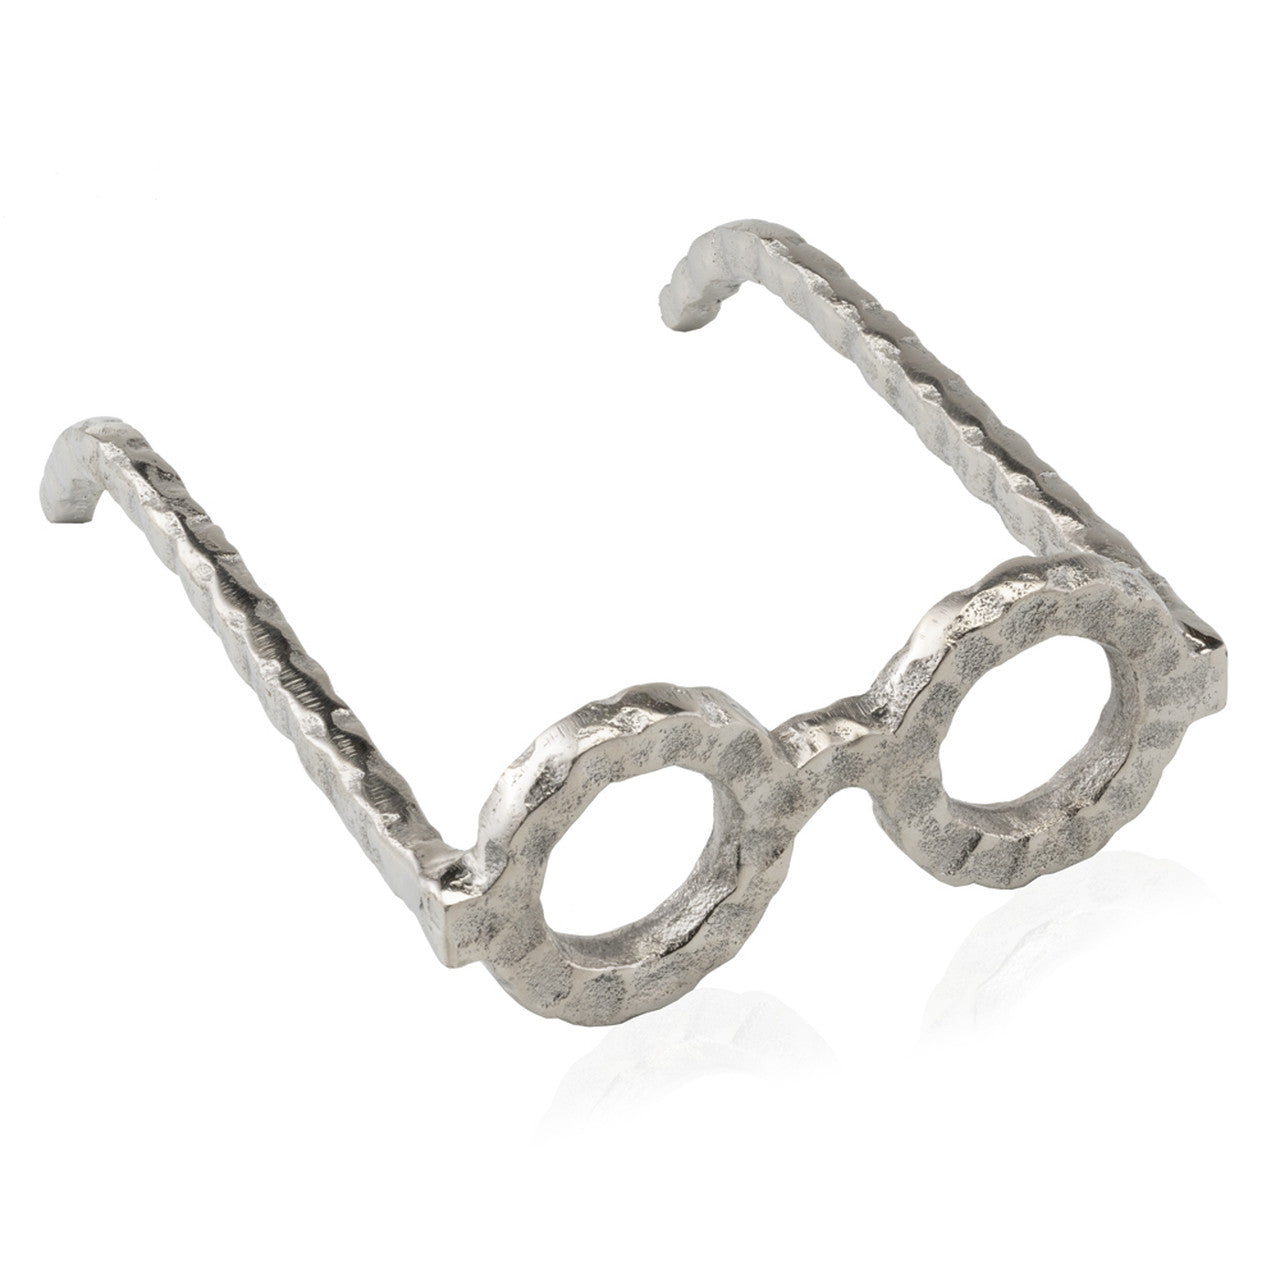 Hammered Silver Metal Eyeglasses Sculpture